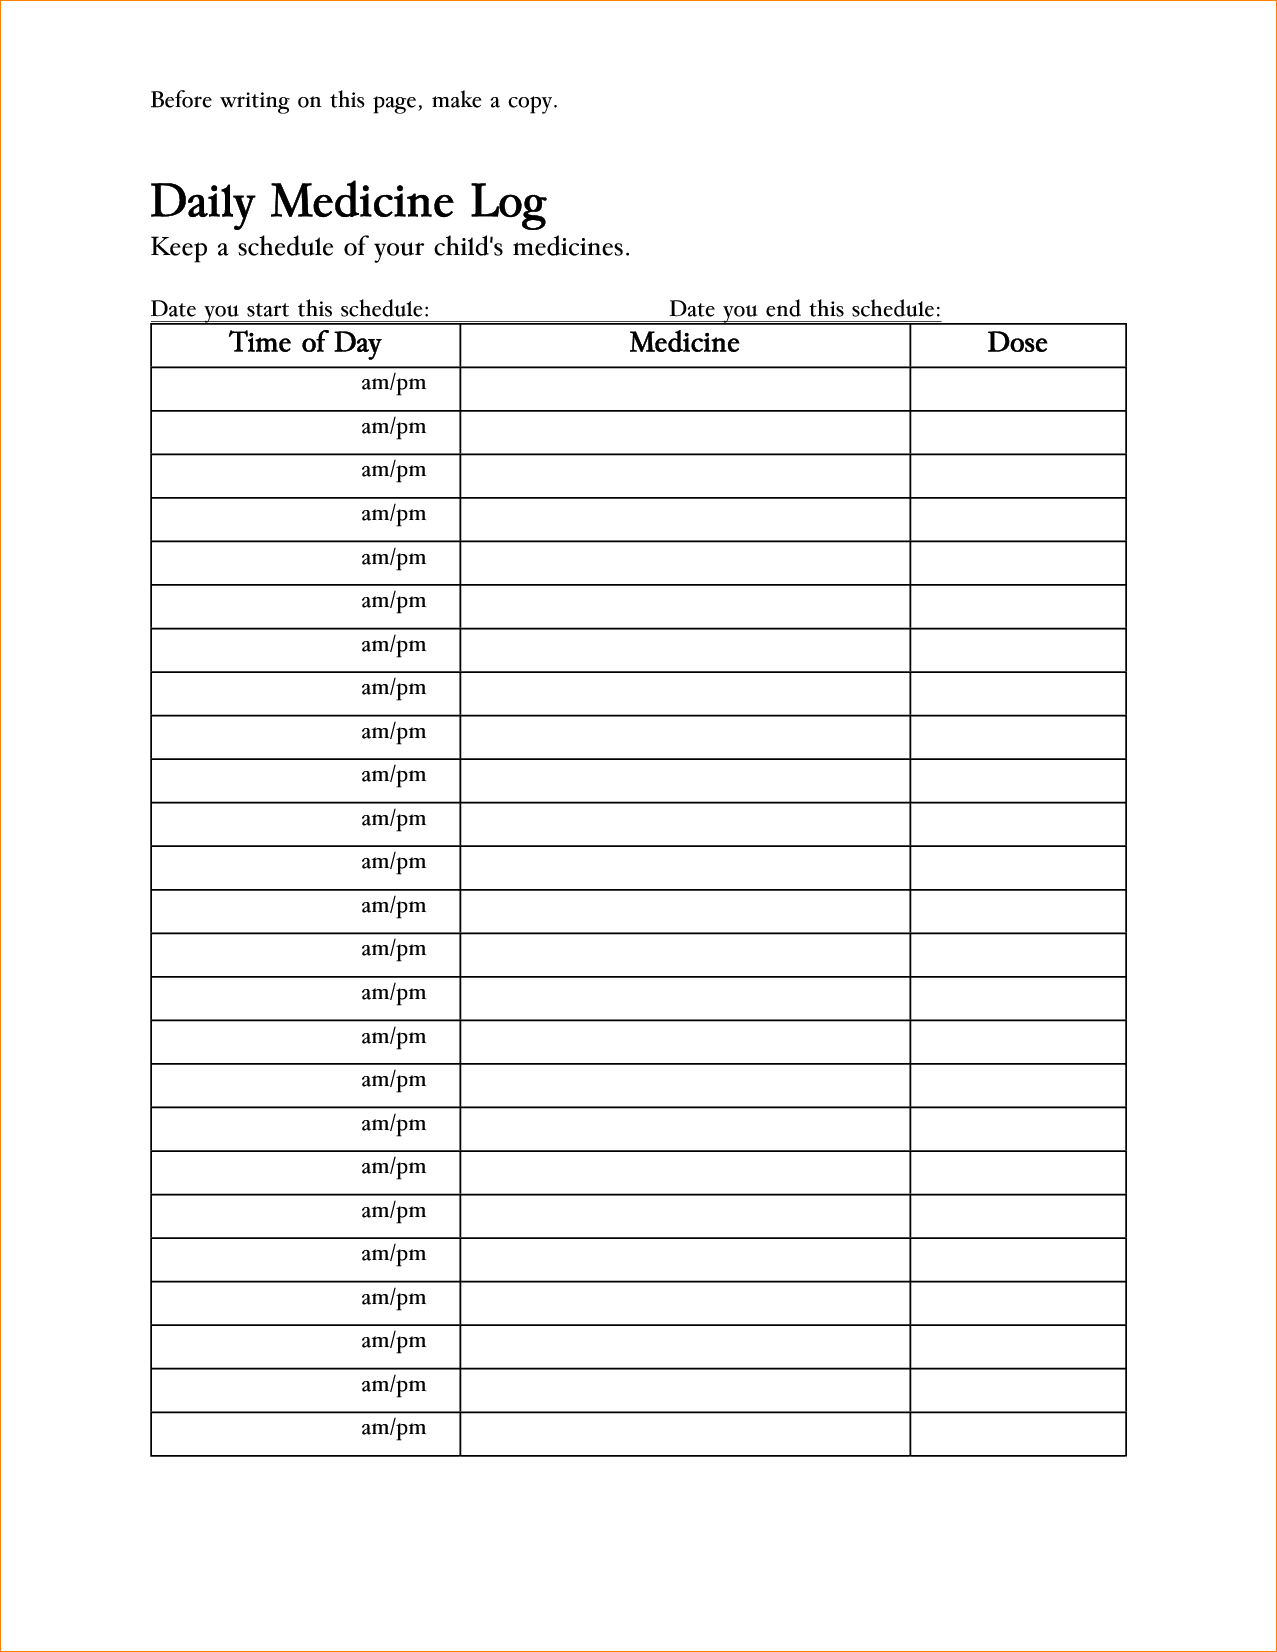 Free Medication Administration Record Template Excel - Yahoo Image - Free Printable Medication Log Sheet